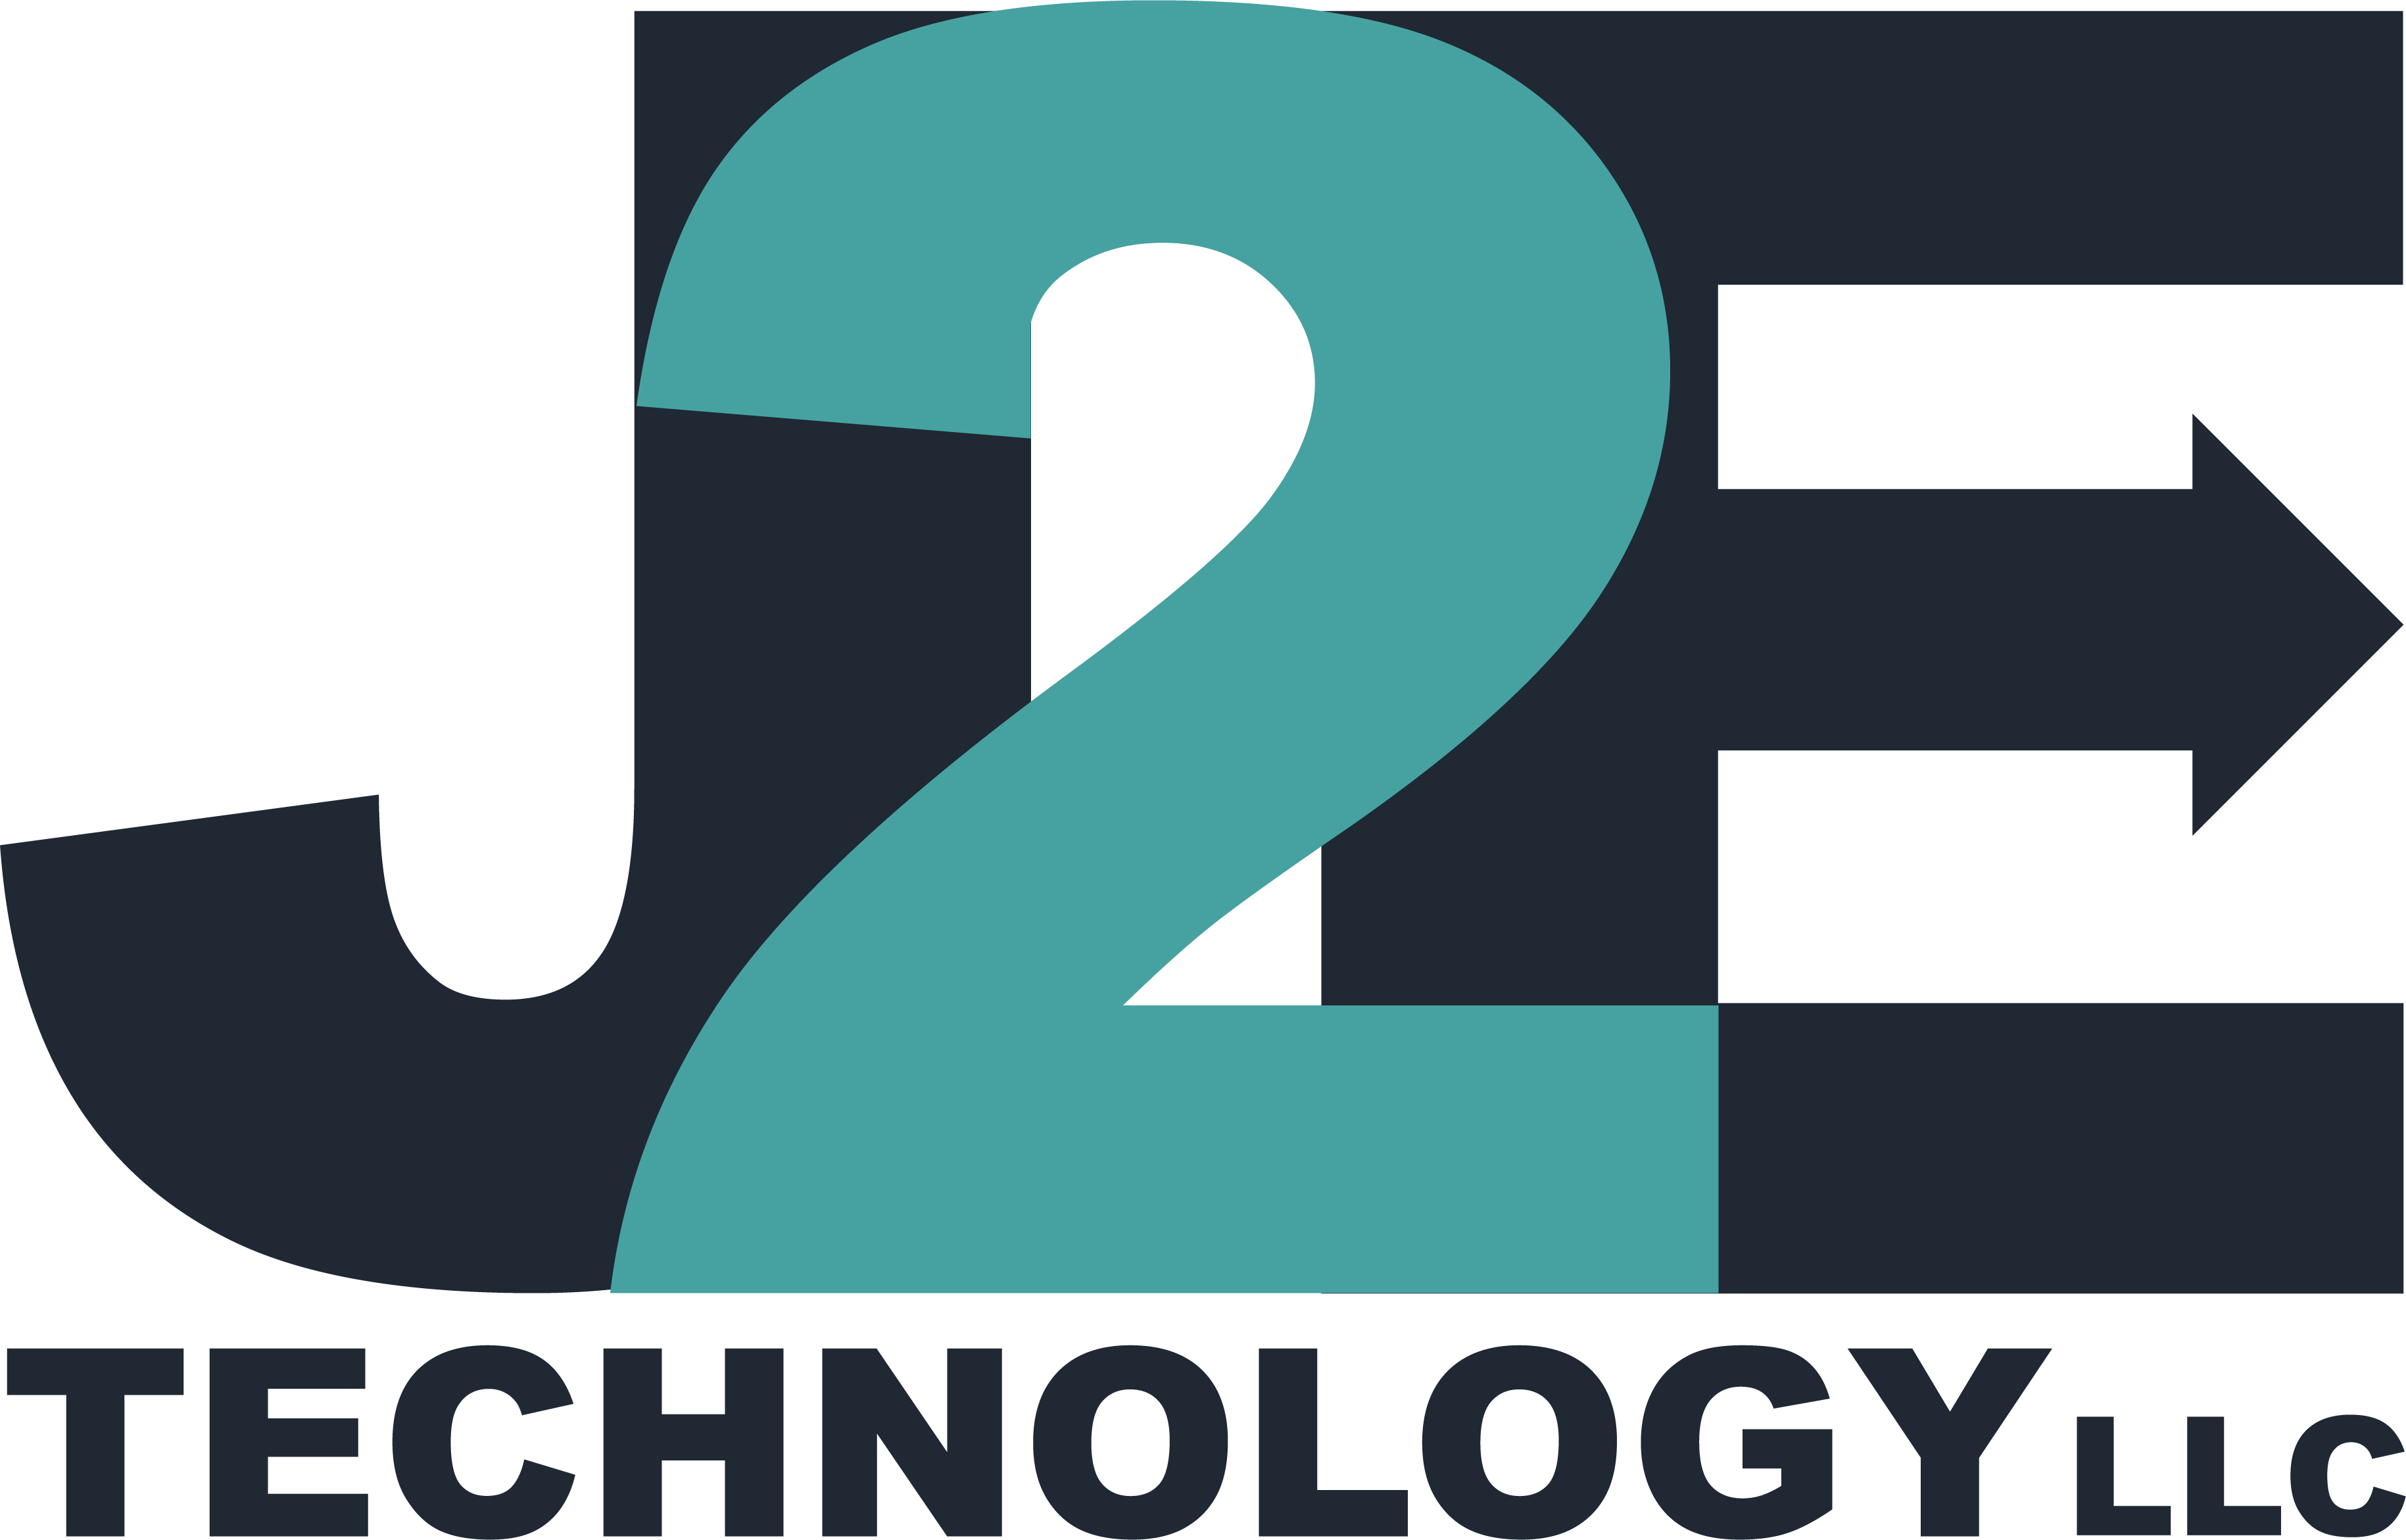 J2E Technology